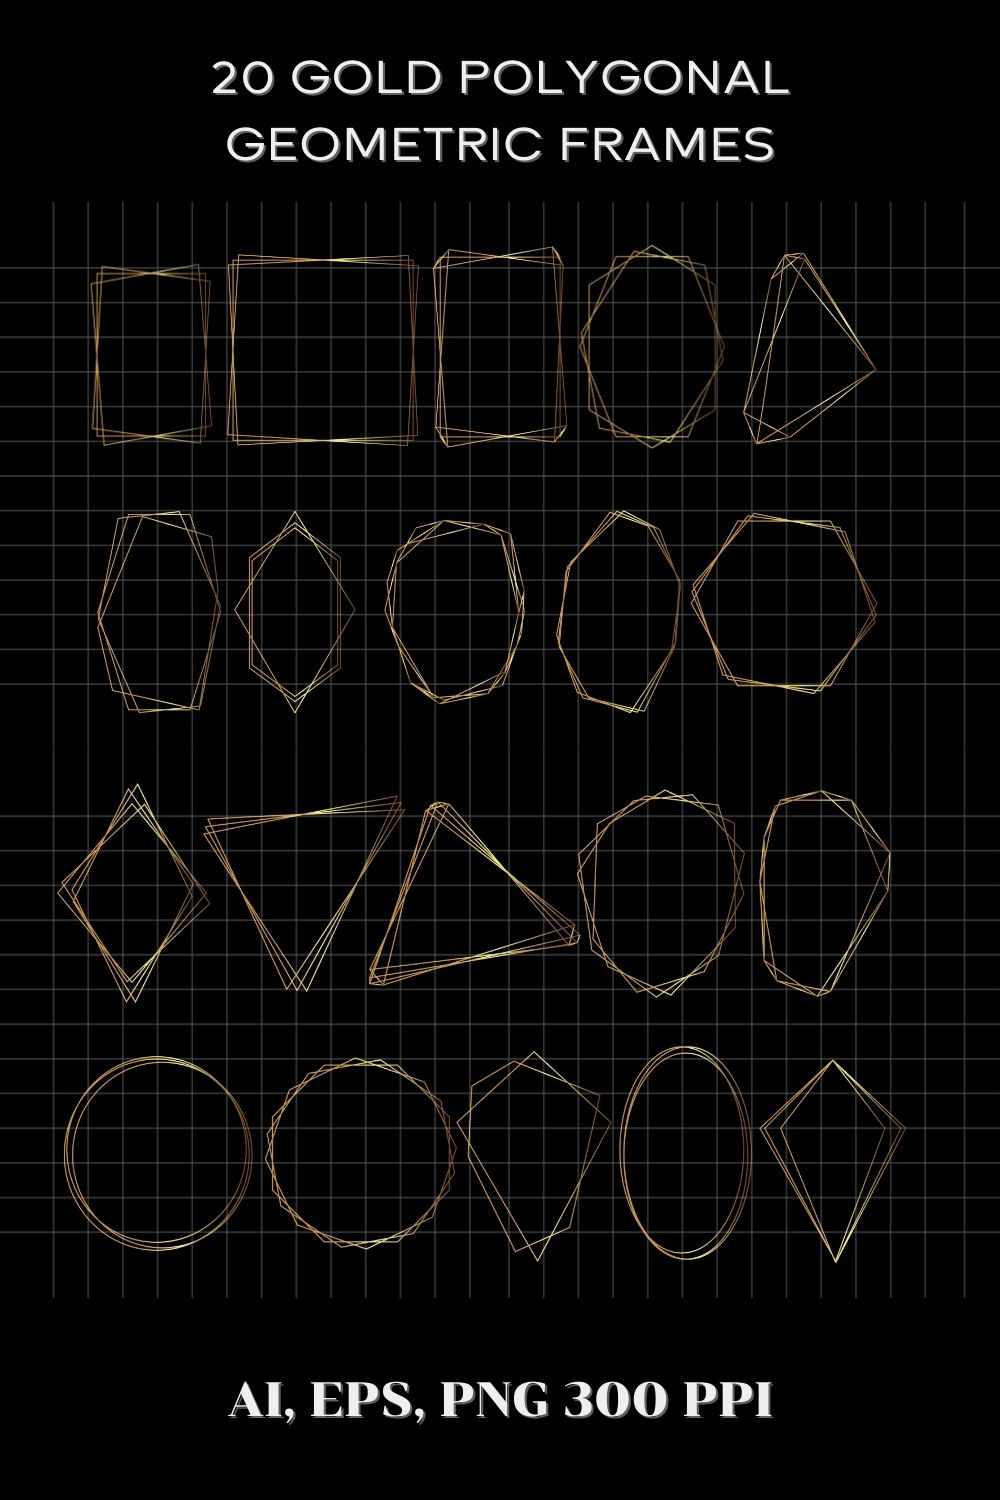 20 Gold Polygonal Geometric Frames pinterest preview image.